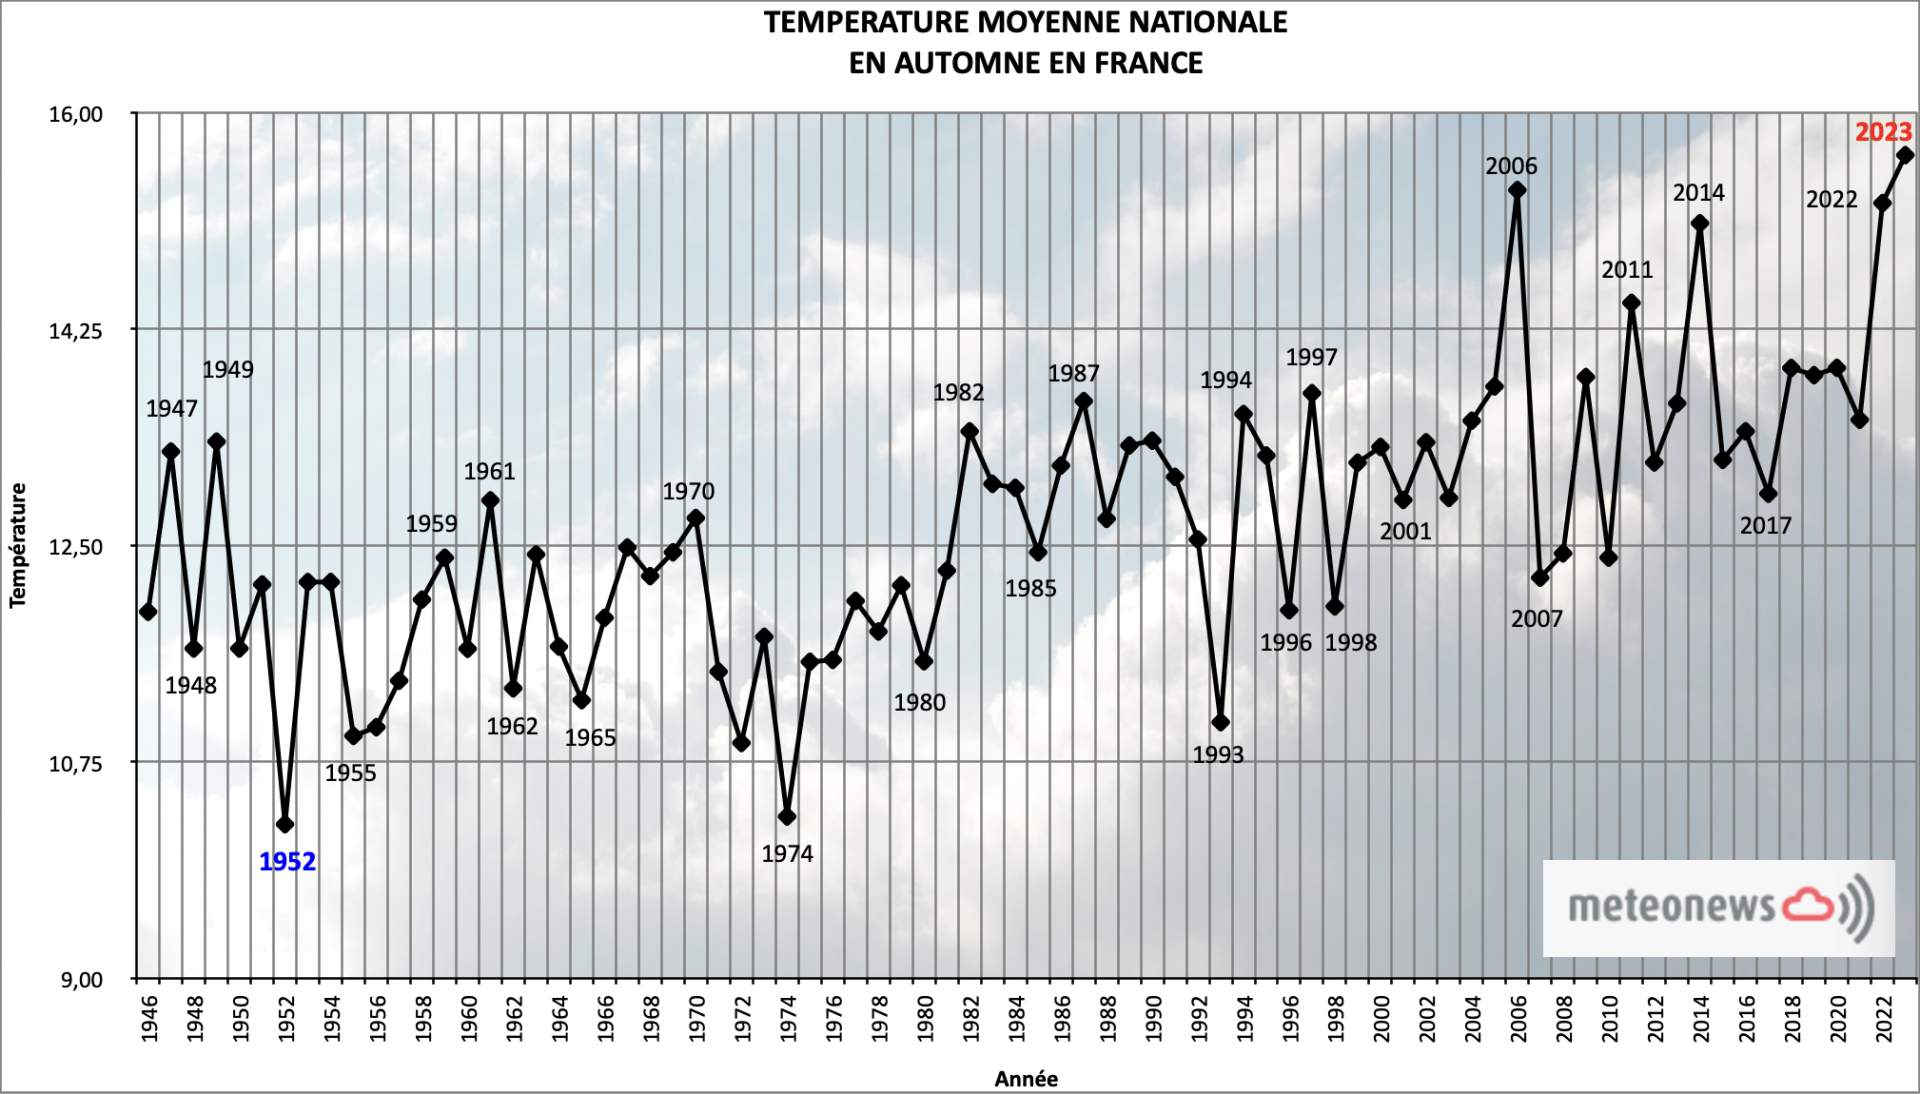 Fig. 1: Température moyenne nationale automnale en France; Source: MeteoNews France